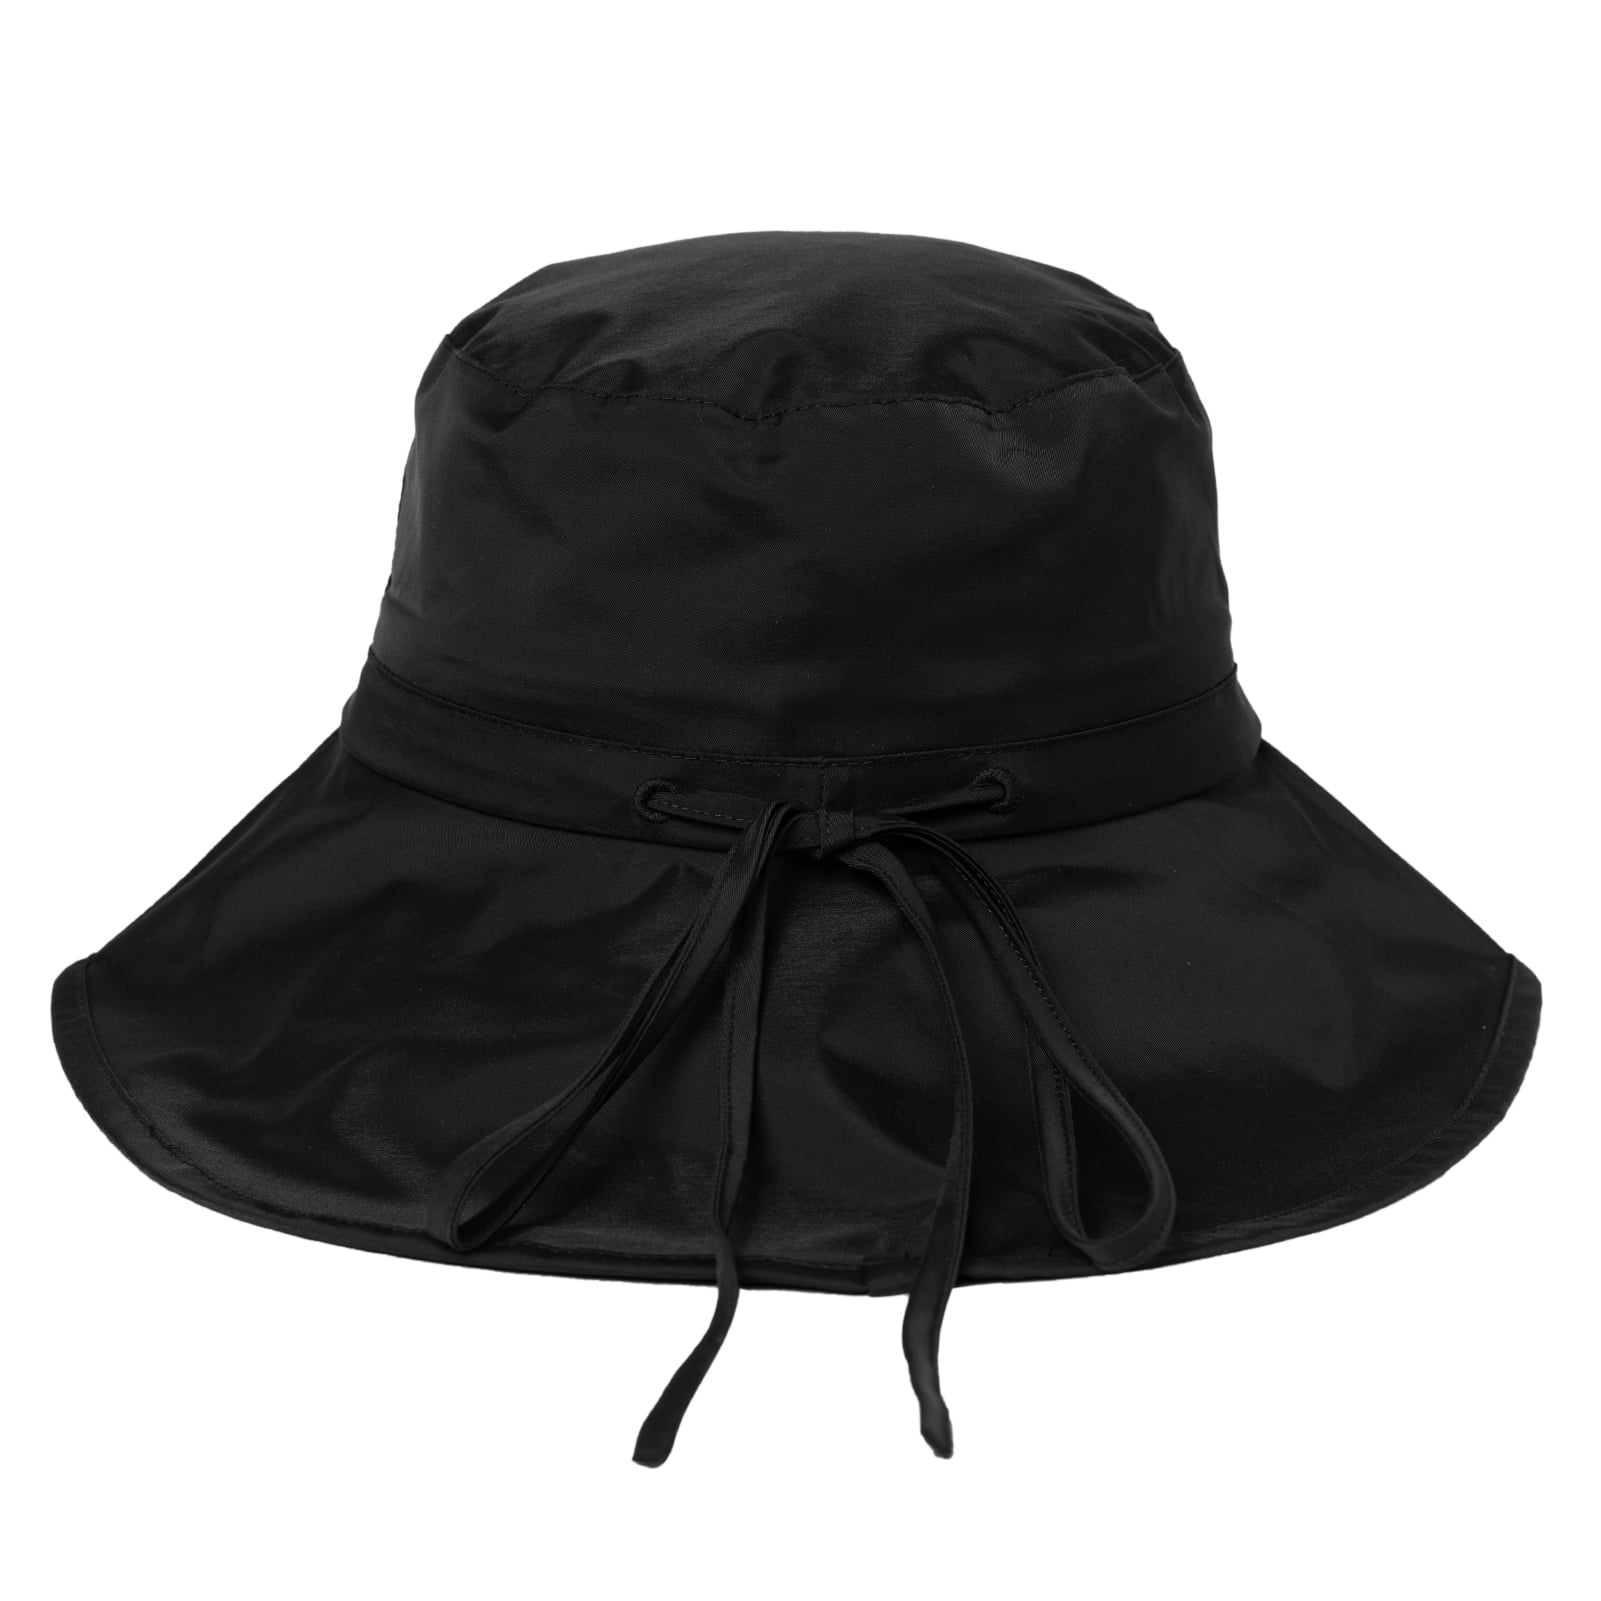 Comhats Womens Bucket Sun Hat UPF 50 Waterproof Rain Hats Wide Brim Walking Hiking Hat with Chin Strap Packable Adjustable